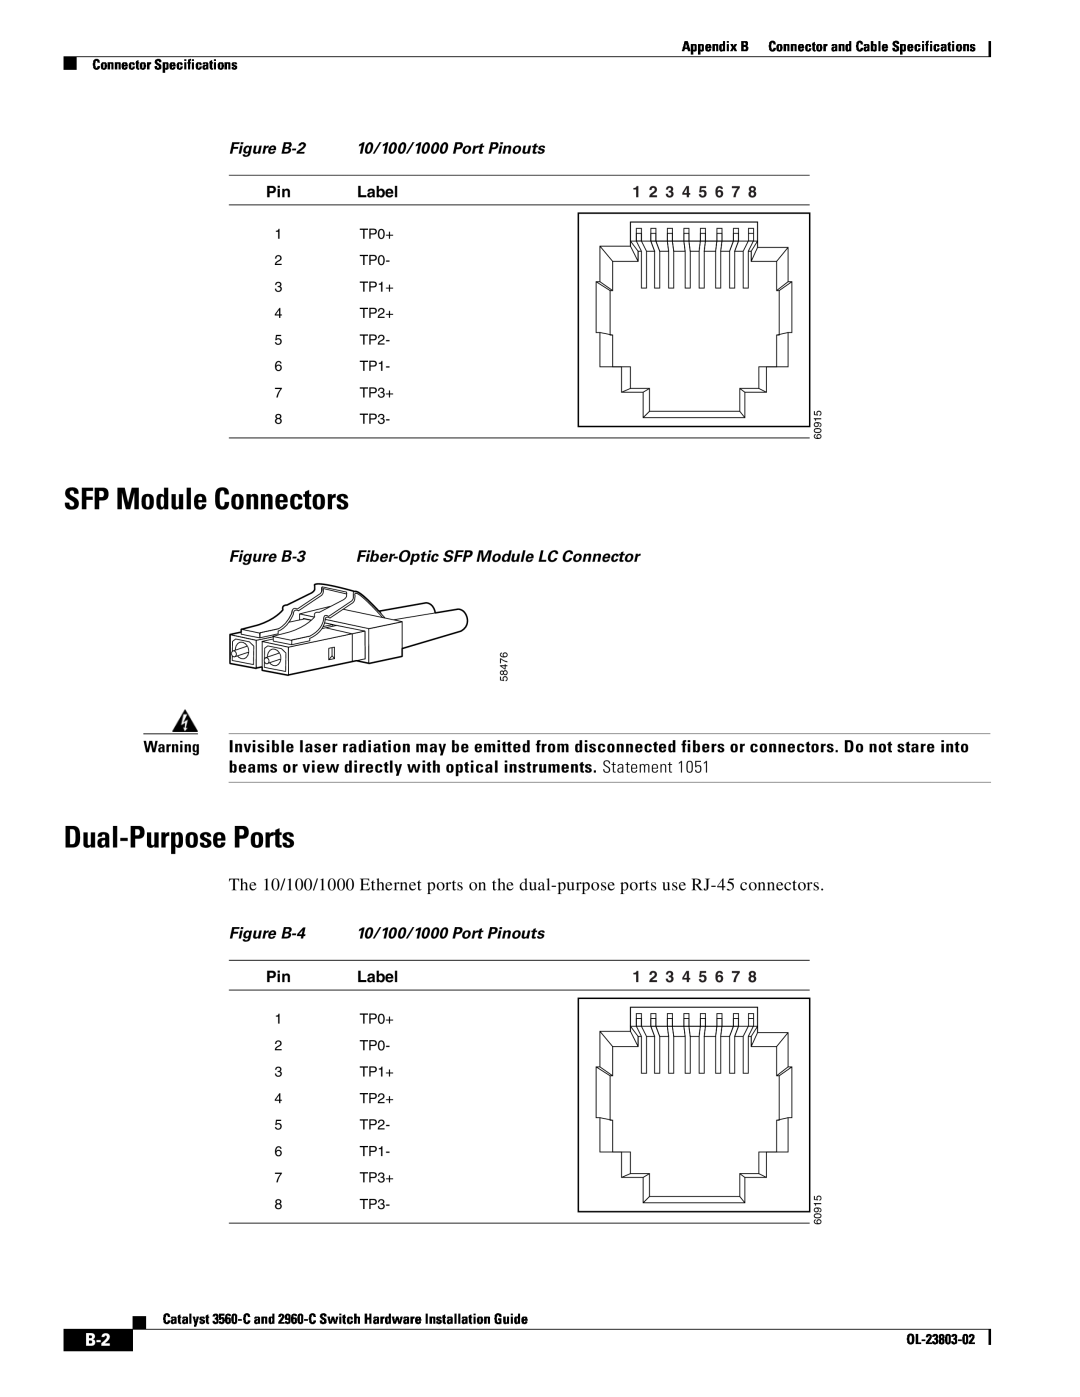 Cisco Systems 3560-C SFP Module Connectors, Dual-Purpose Ports, Figure B-2 10/100/1000 Port Pinouts, Pin Label, 60915 